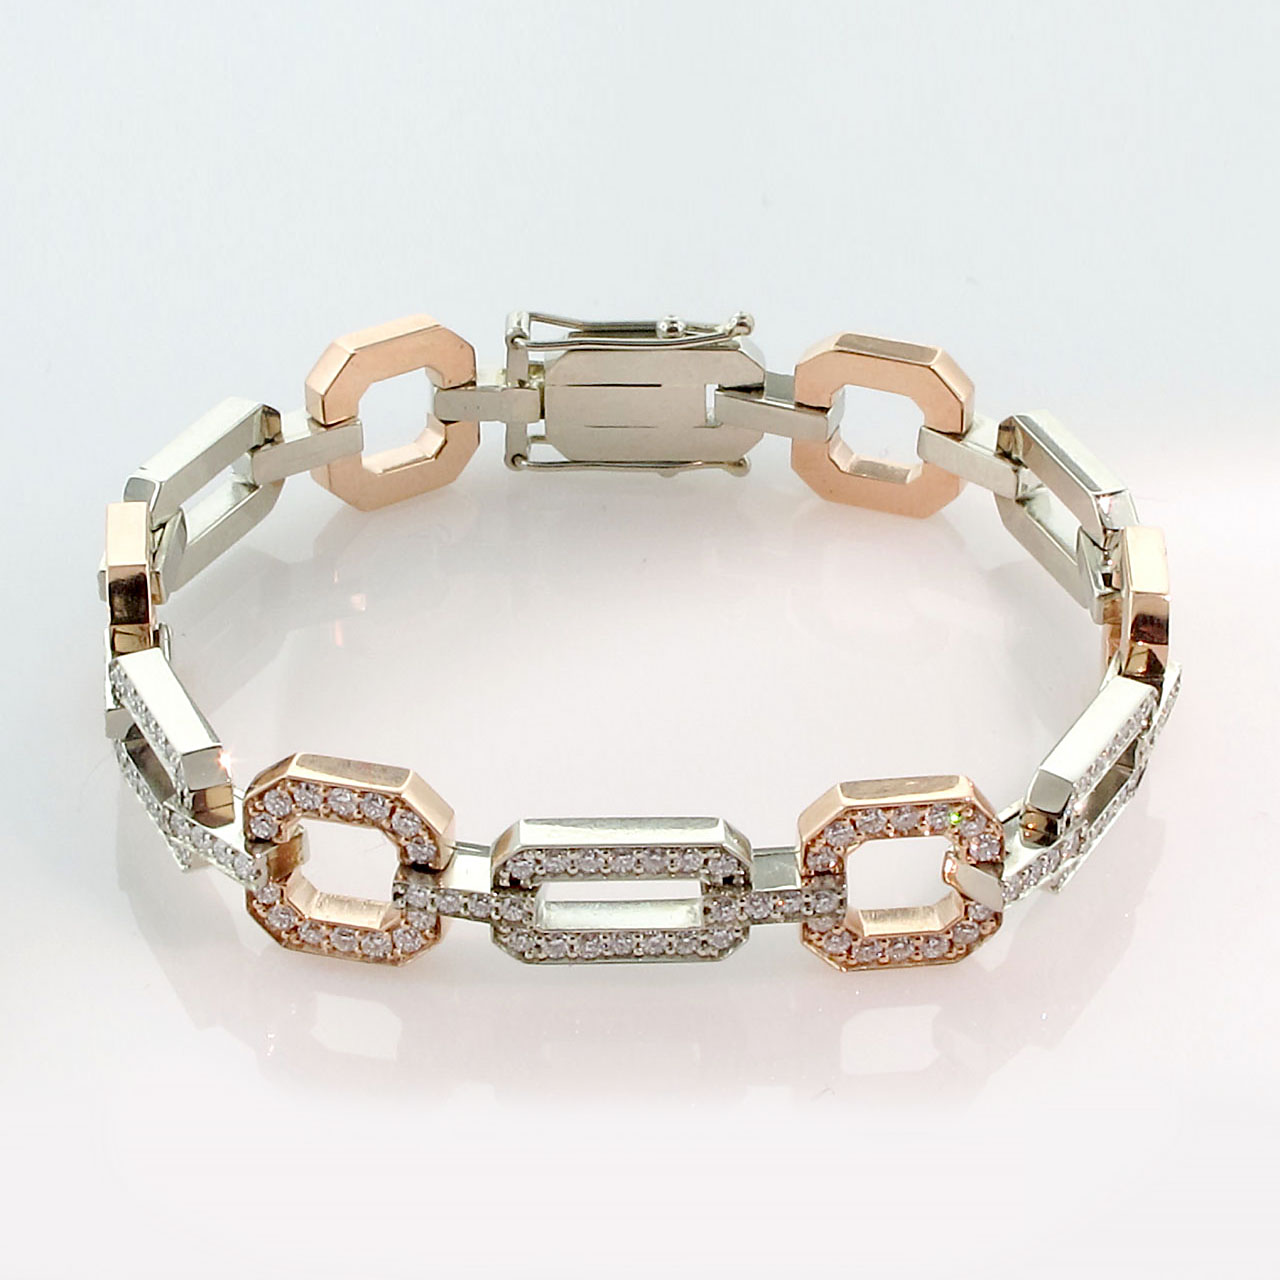 White and Rose Gold diamond studded bracelet pavee